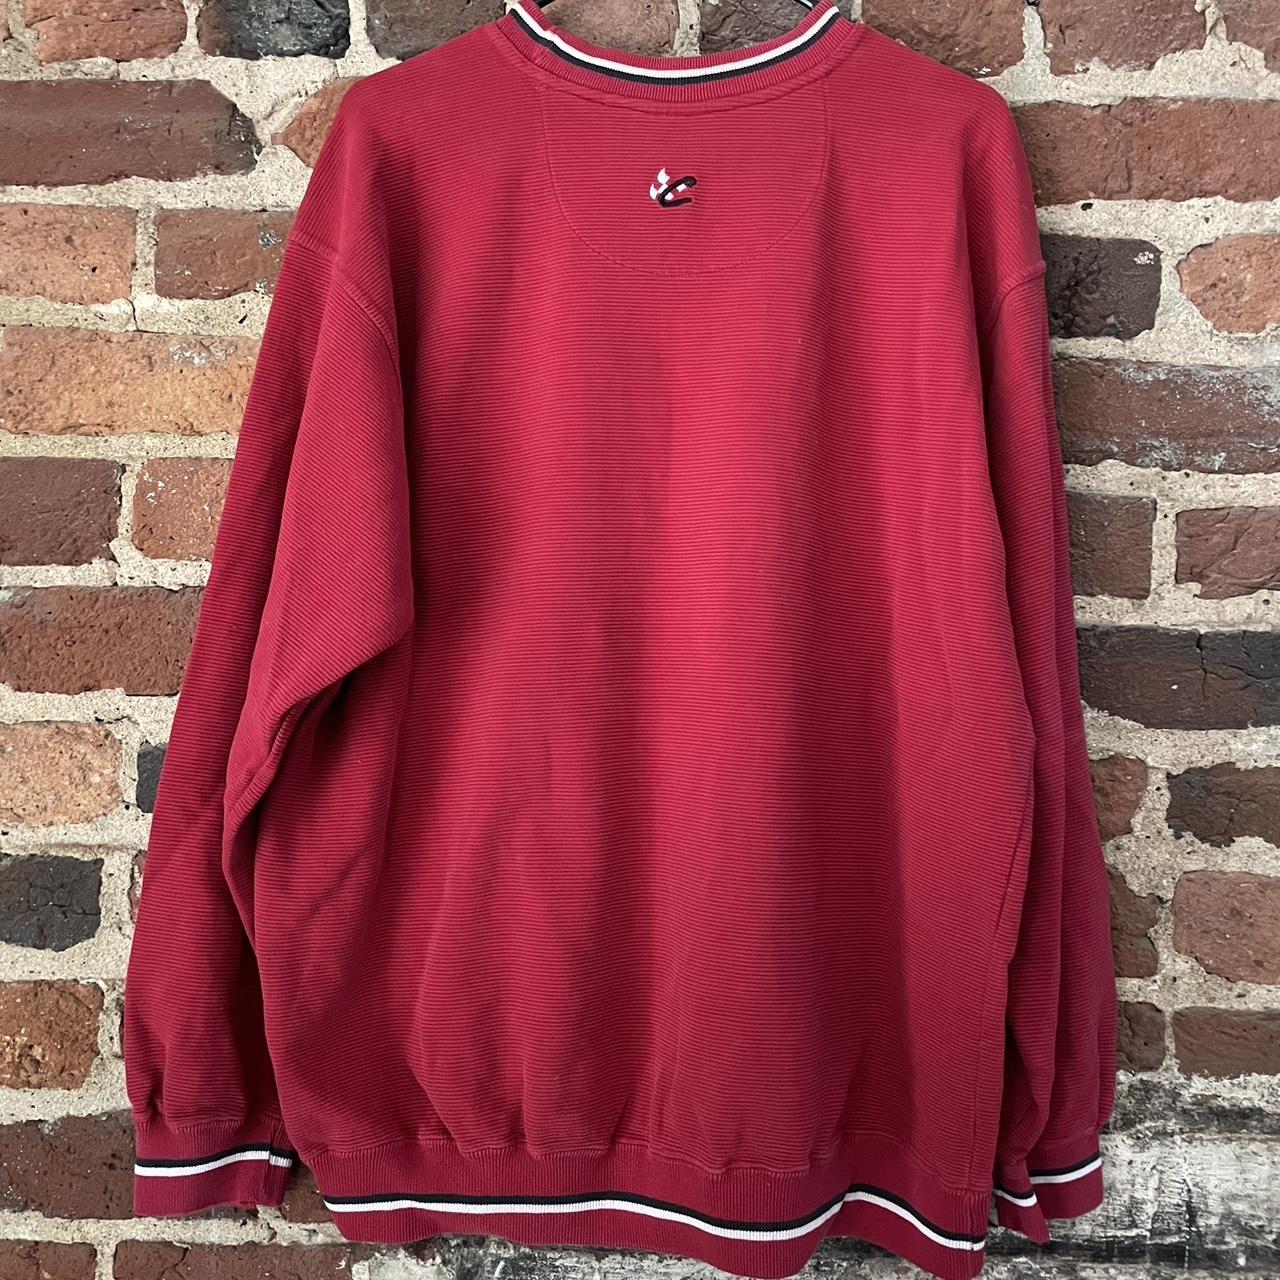 Chase Authentics Men's Red and White Sweatshirt (3)